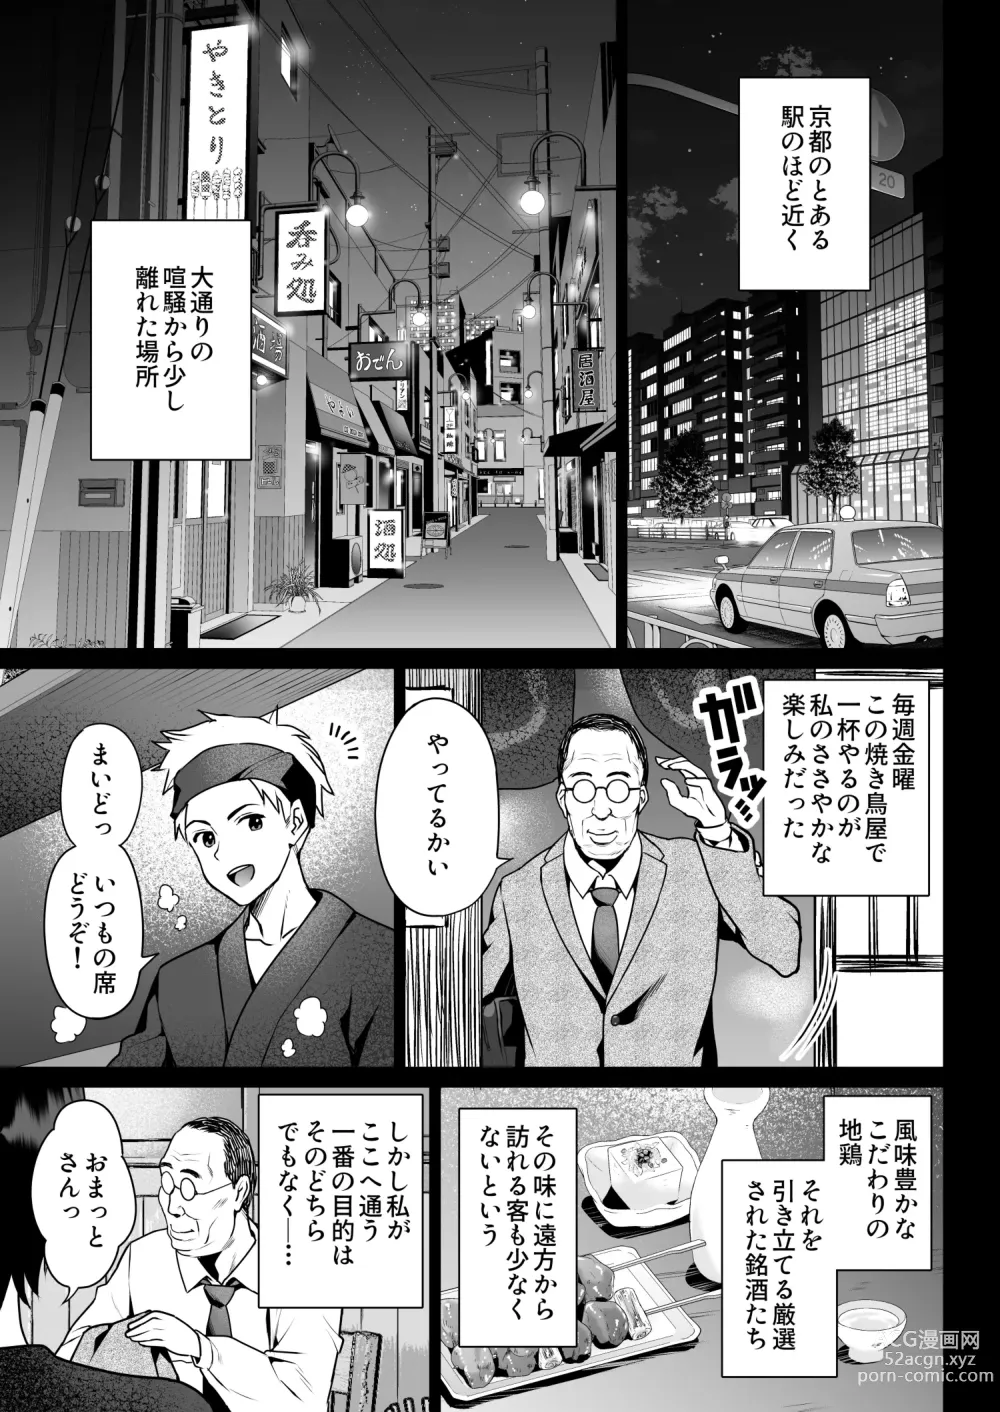 Page 2 of doujinshi Oshidori Fuufu Yakitorare